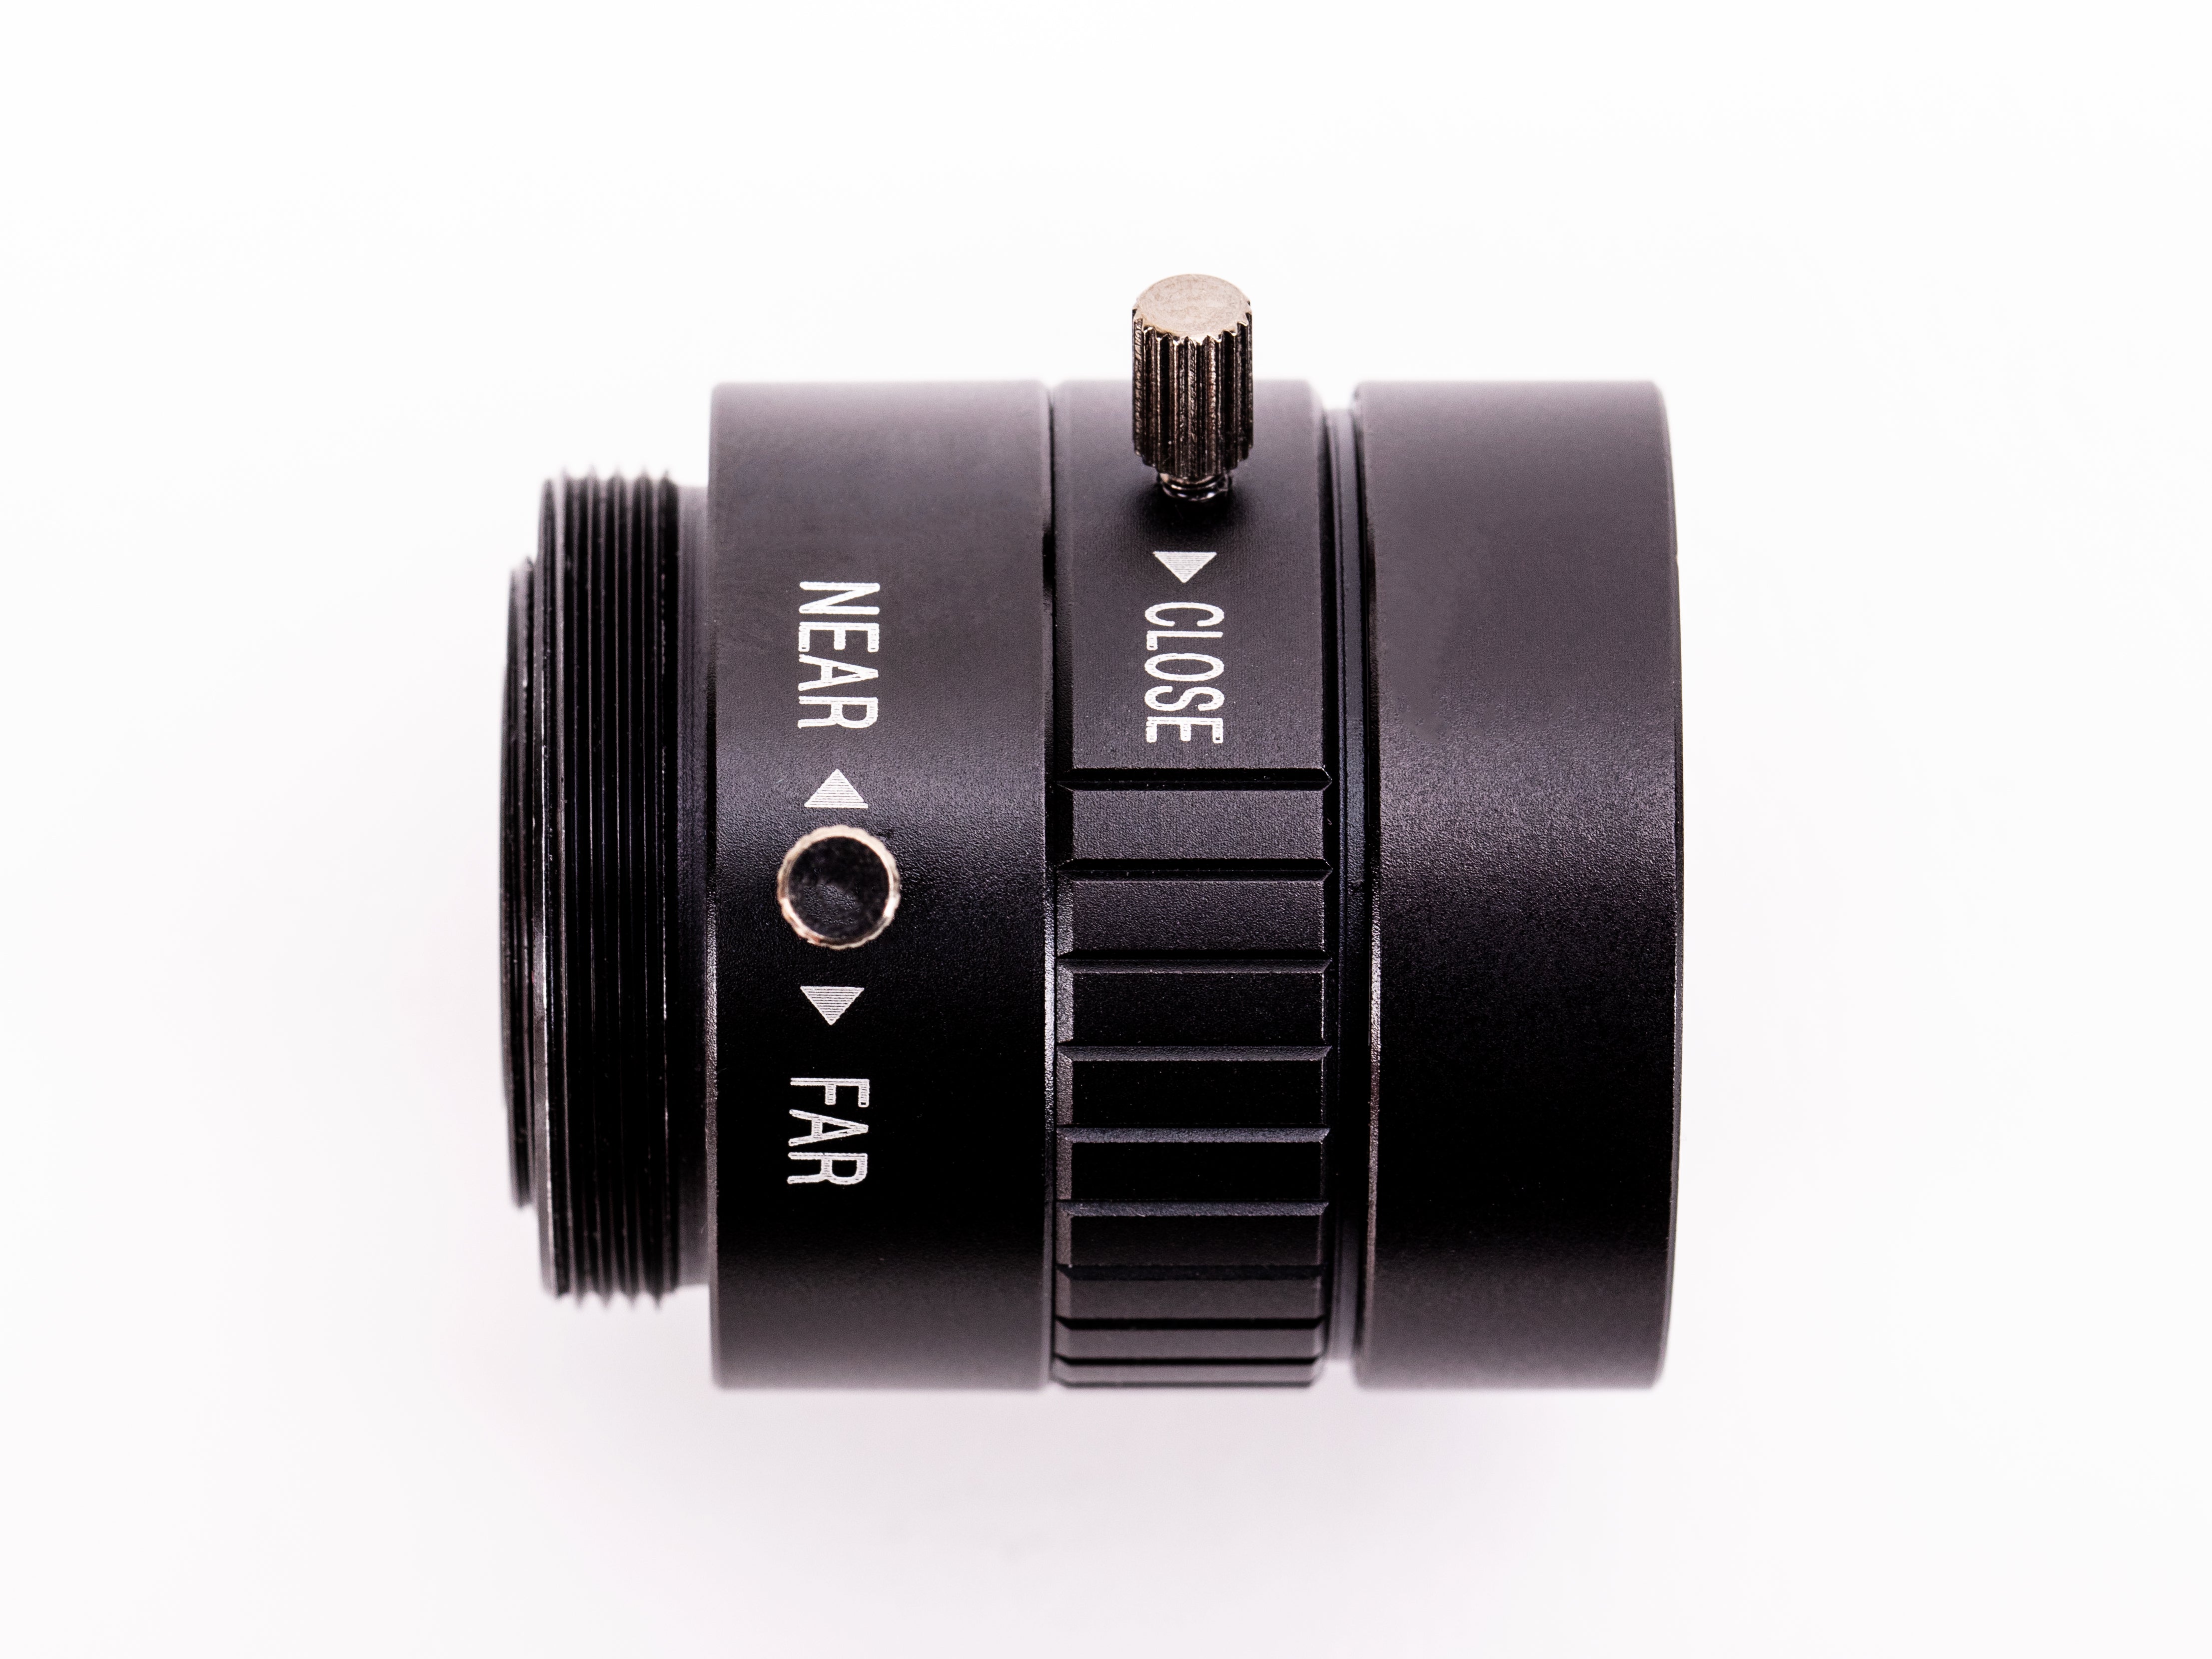 Lens for the Raspberry Pi High Quality Camera – 6mm Telephoto